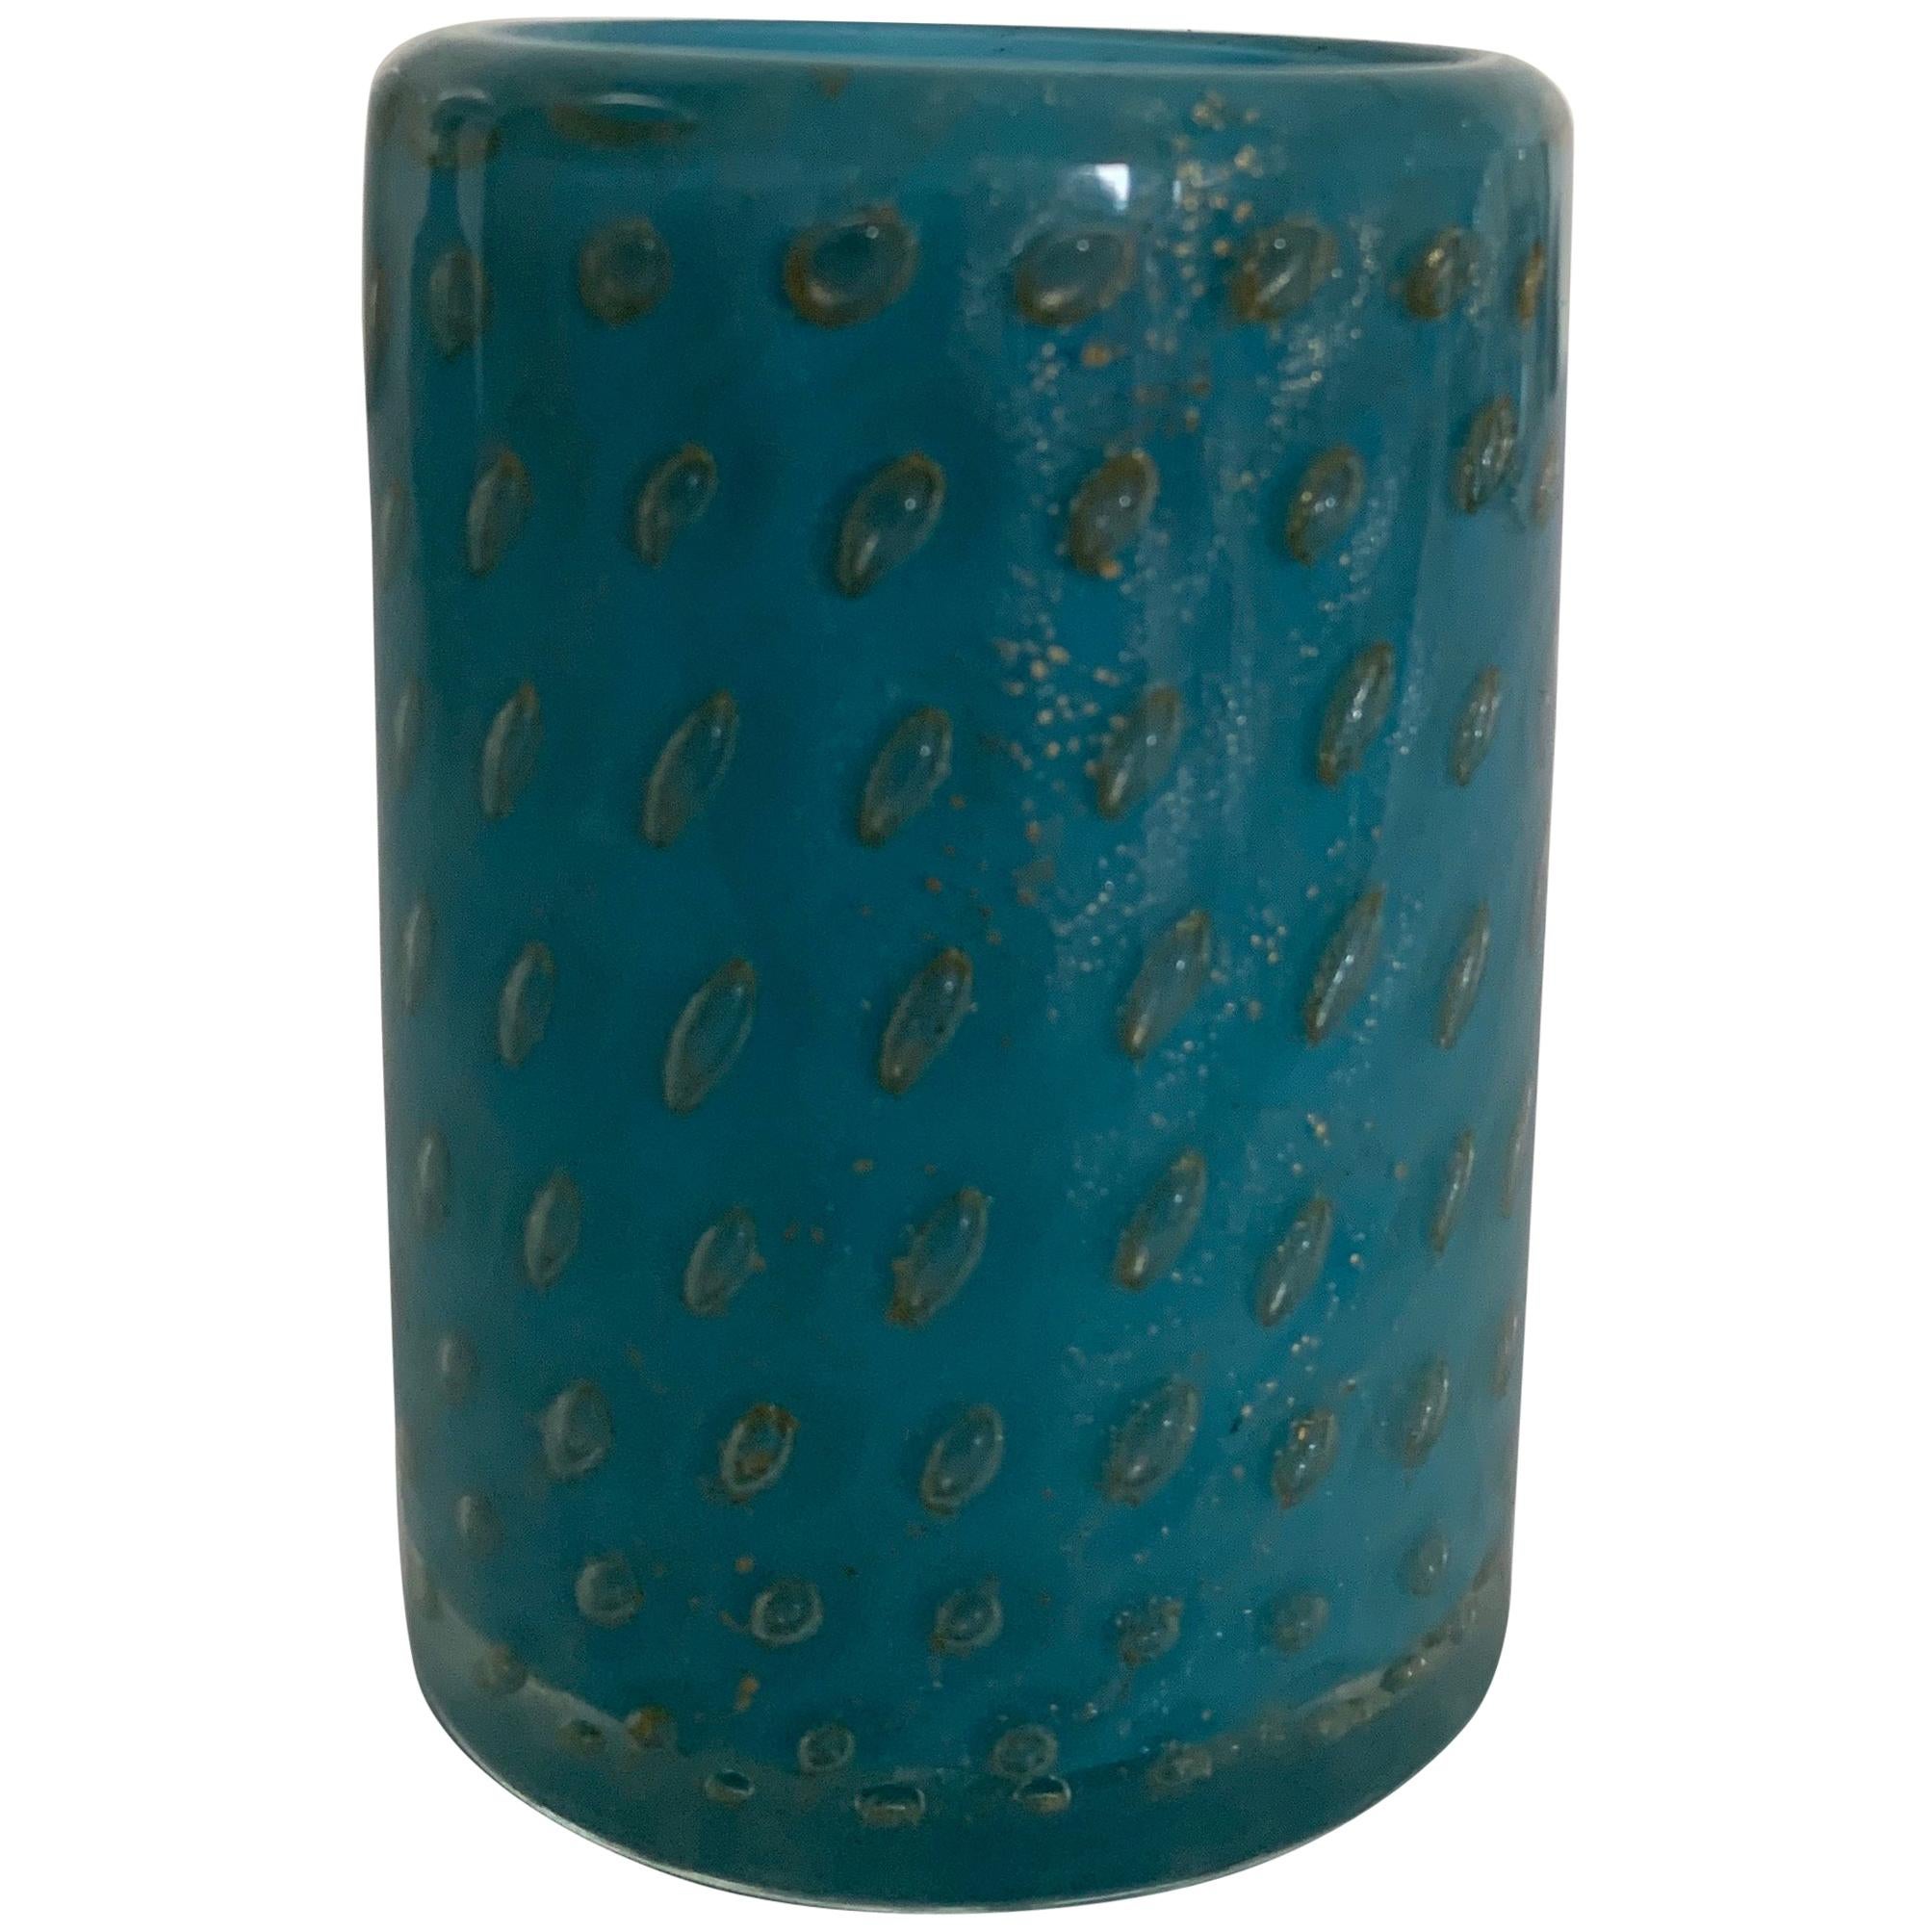 Murano Robins Egg Blue Bud Vase Attributed to Barbini